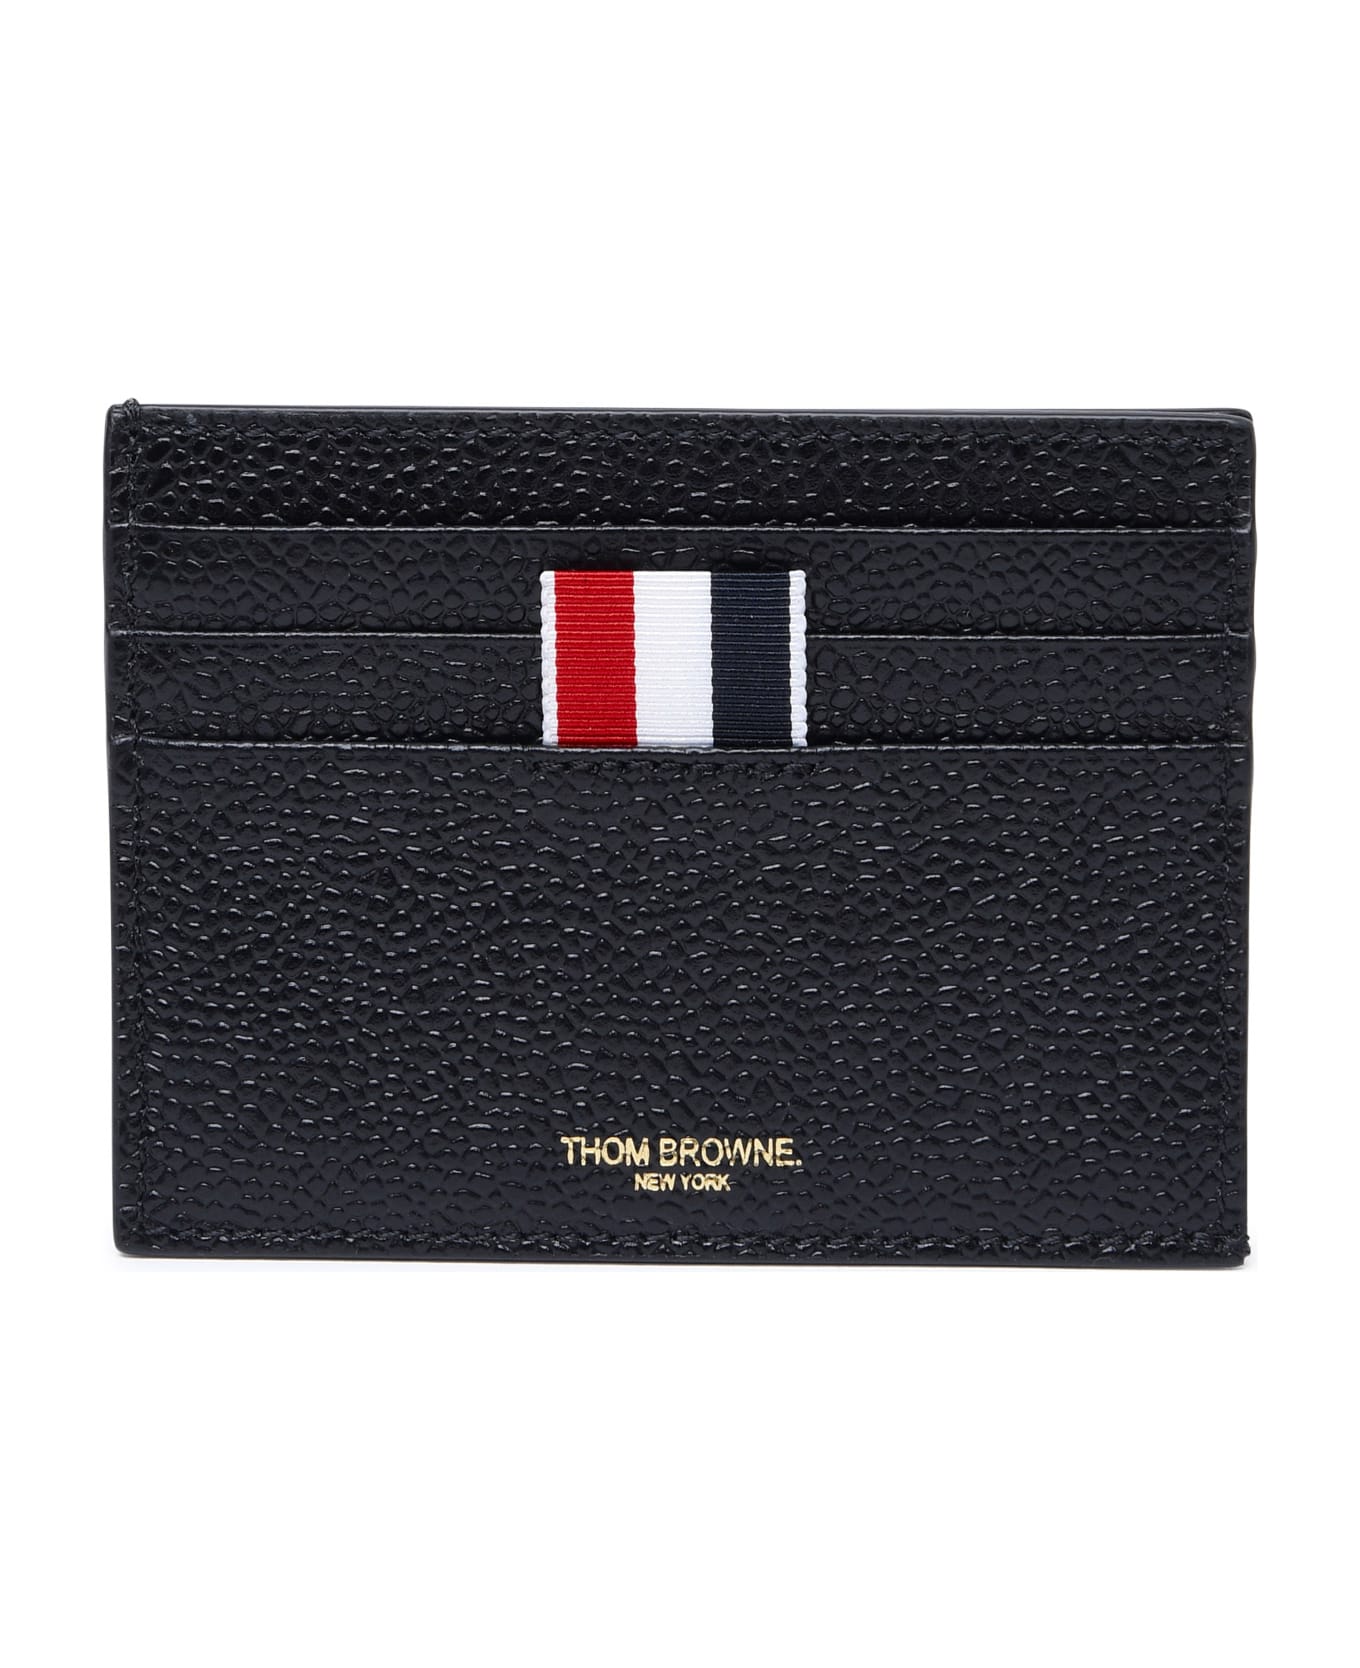 Thom Browne Black Leather Card Holder - Black